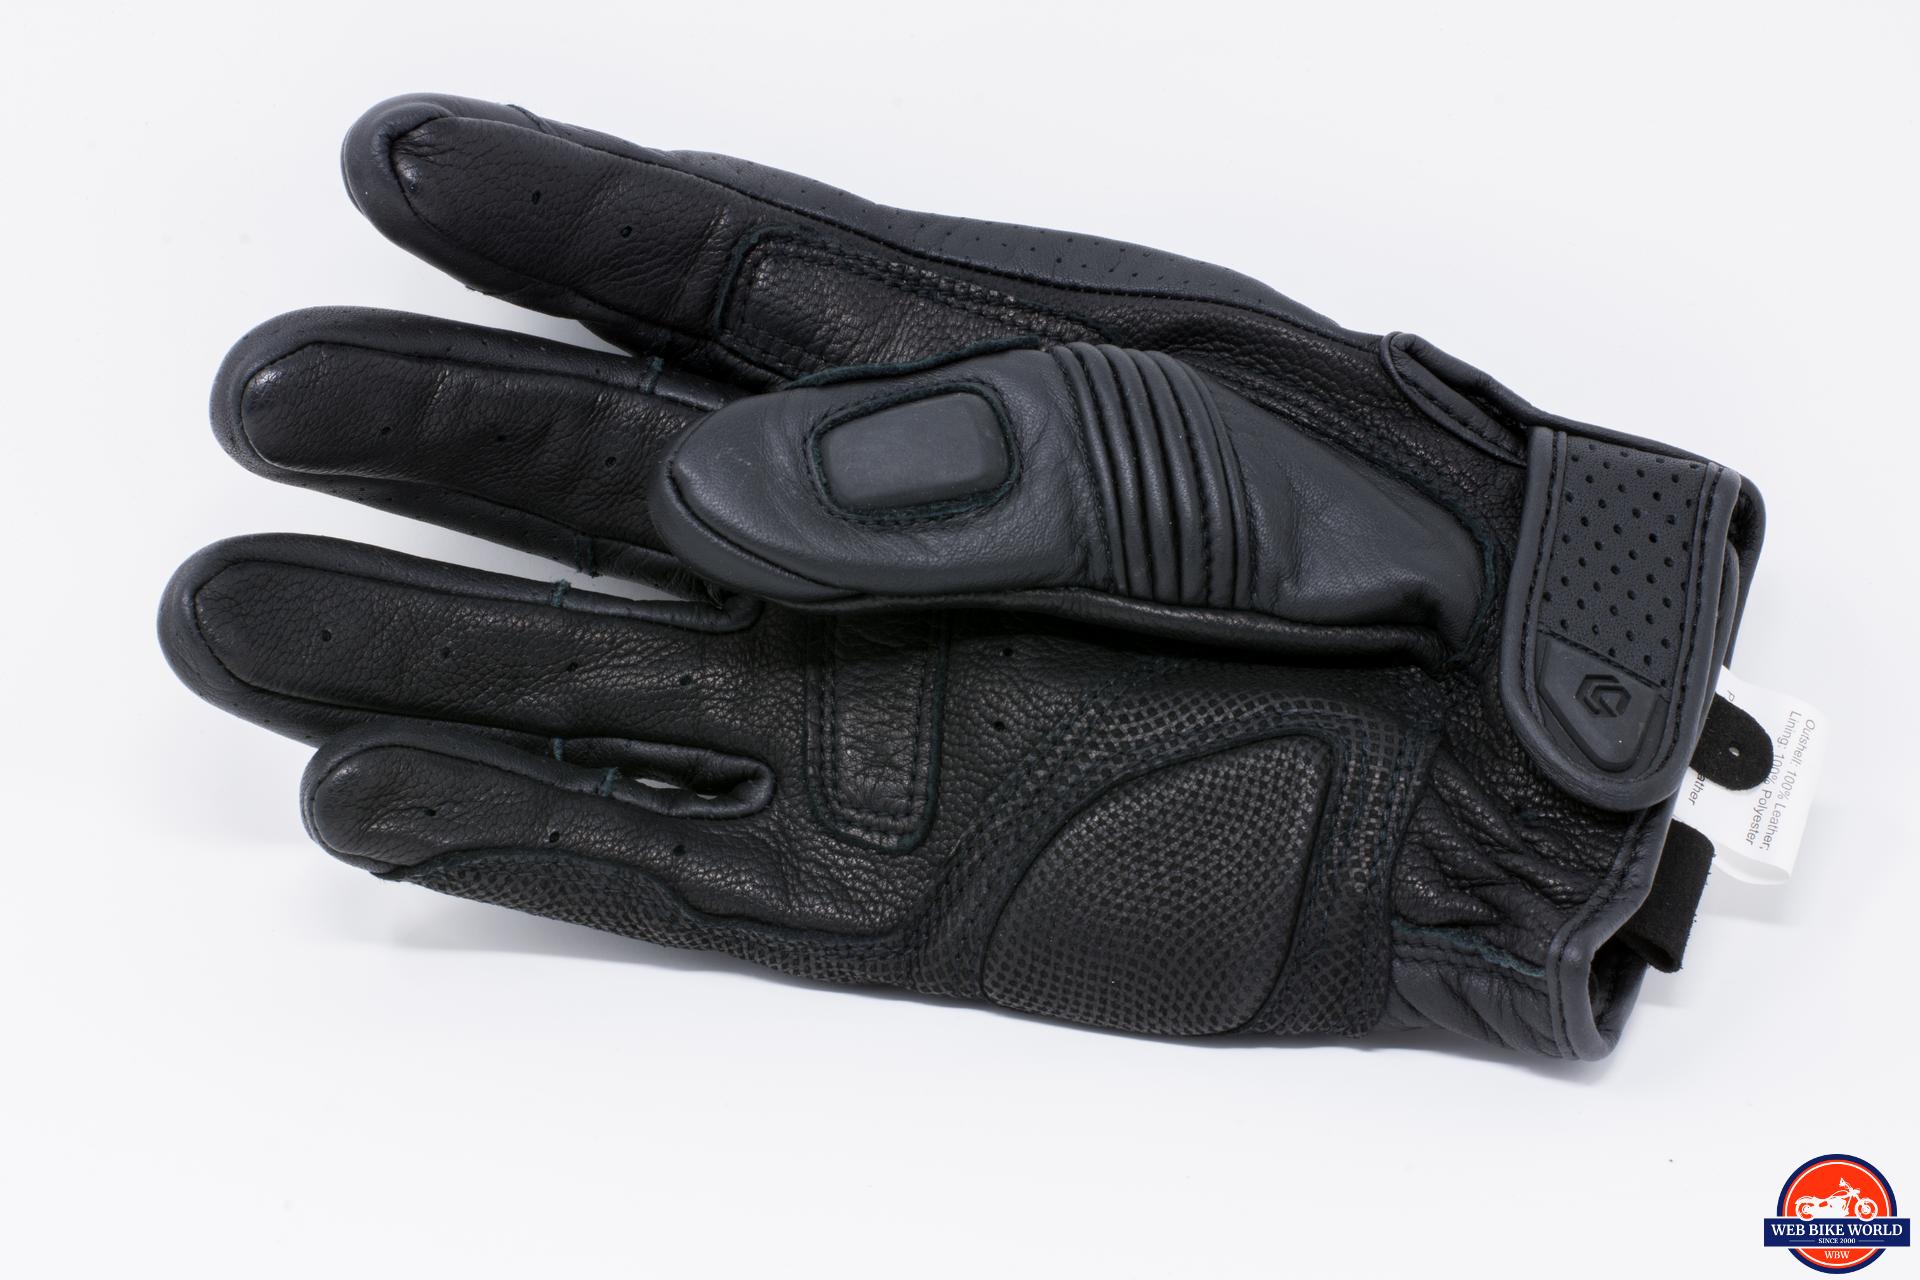 REAX Tasker Leather Gloves